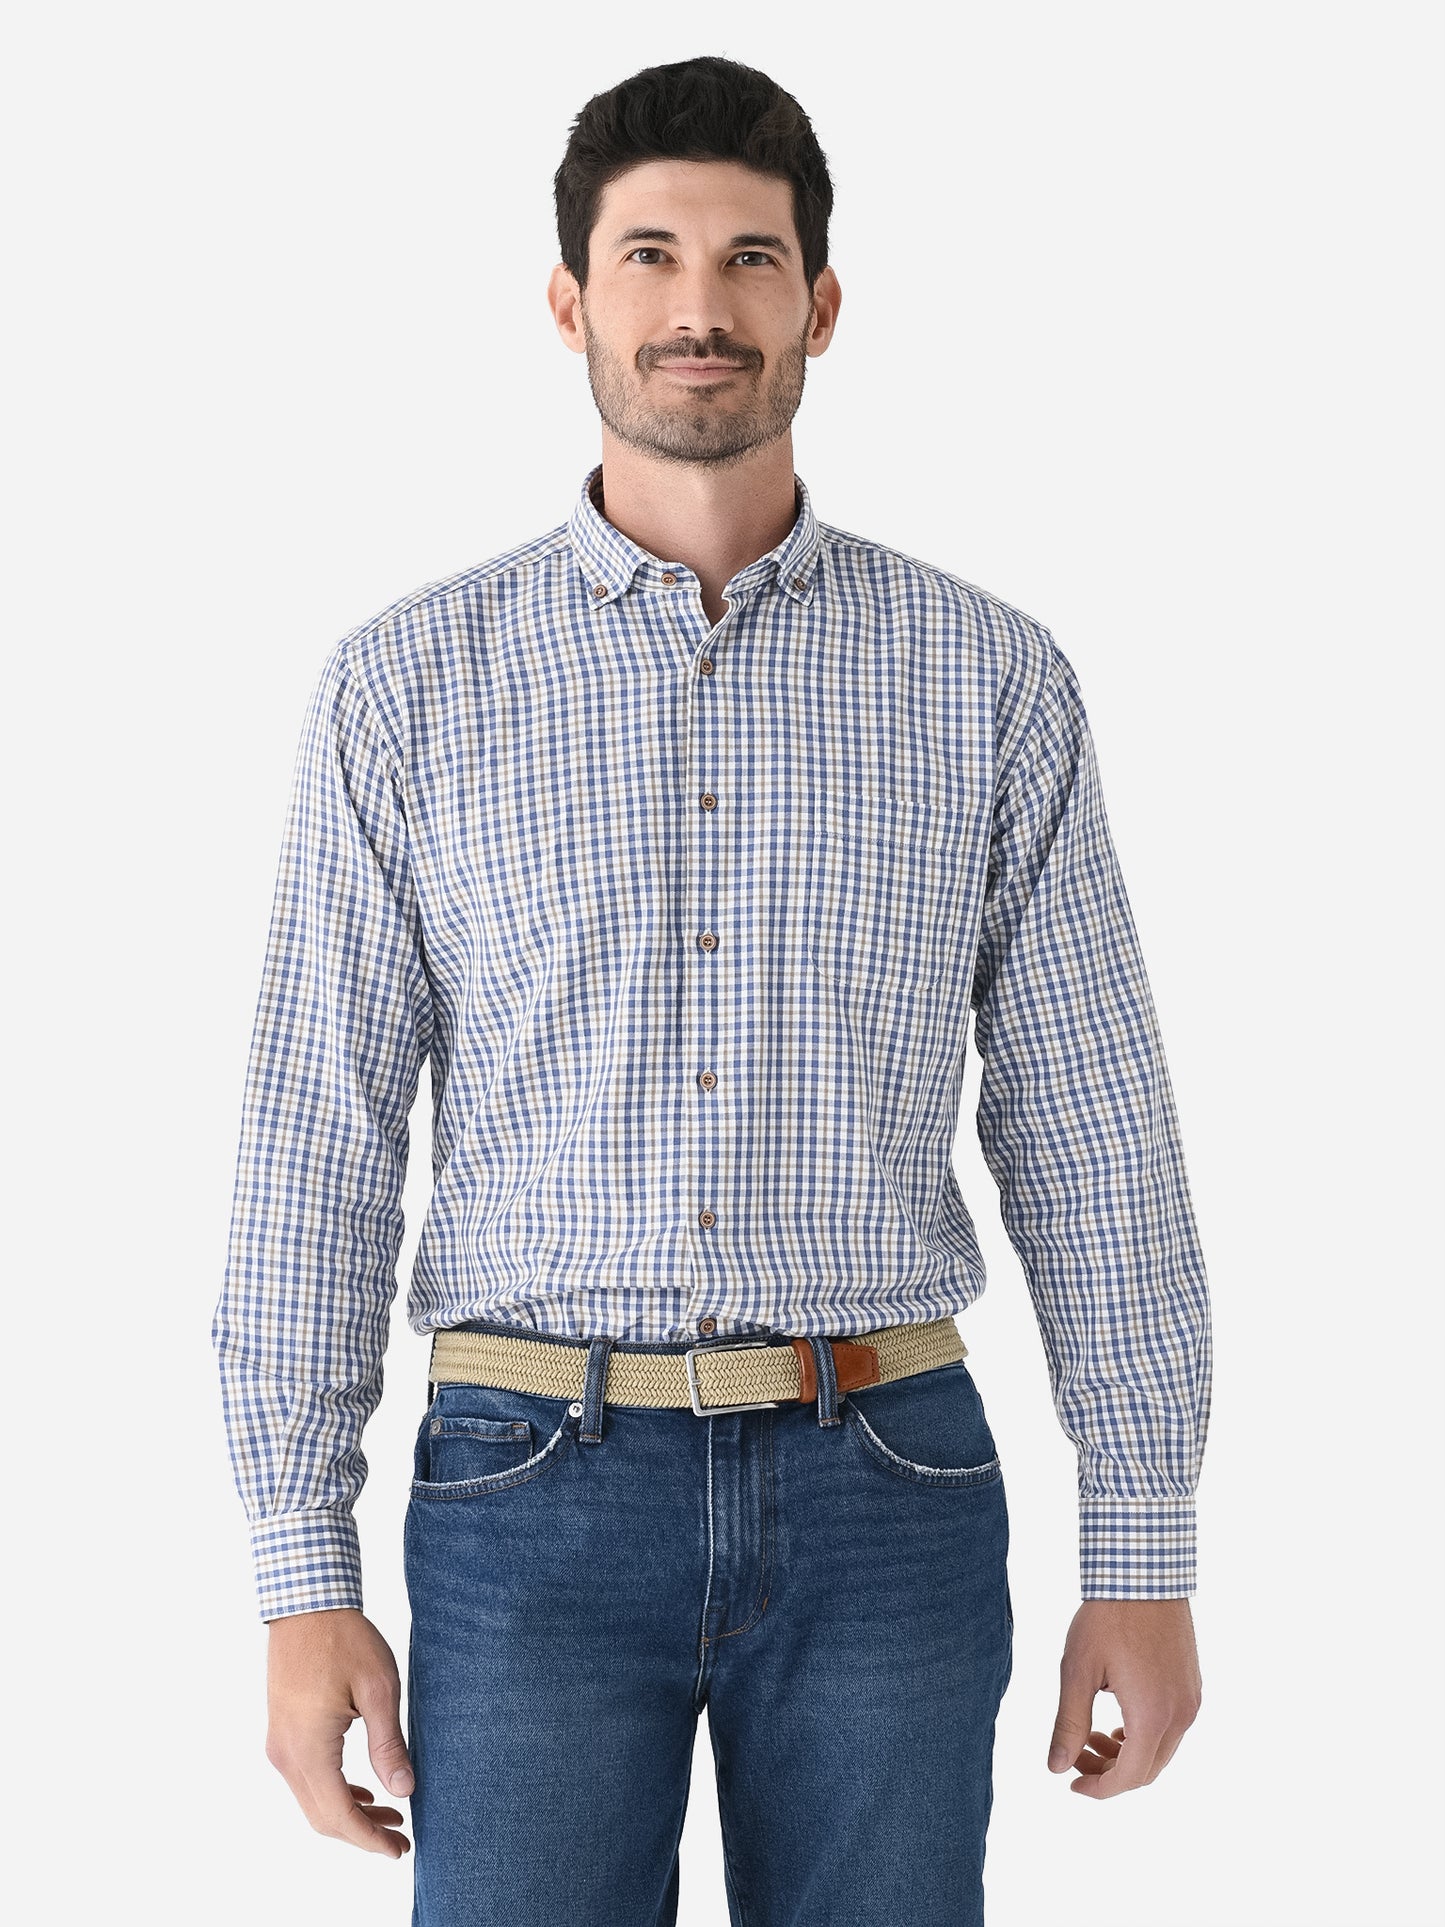 Miller Westby Men's Dane Button-Down Shirt